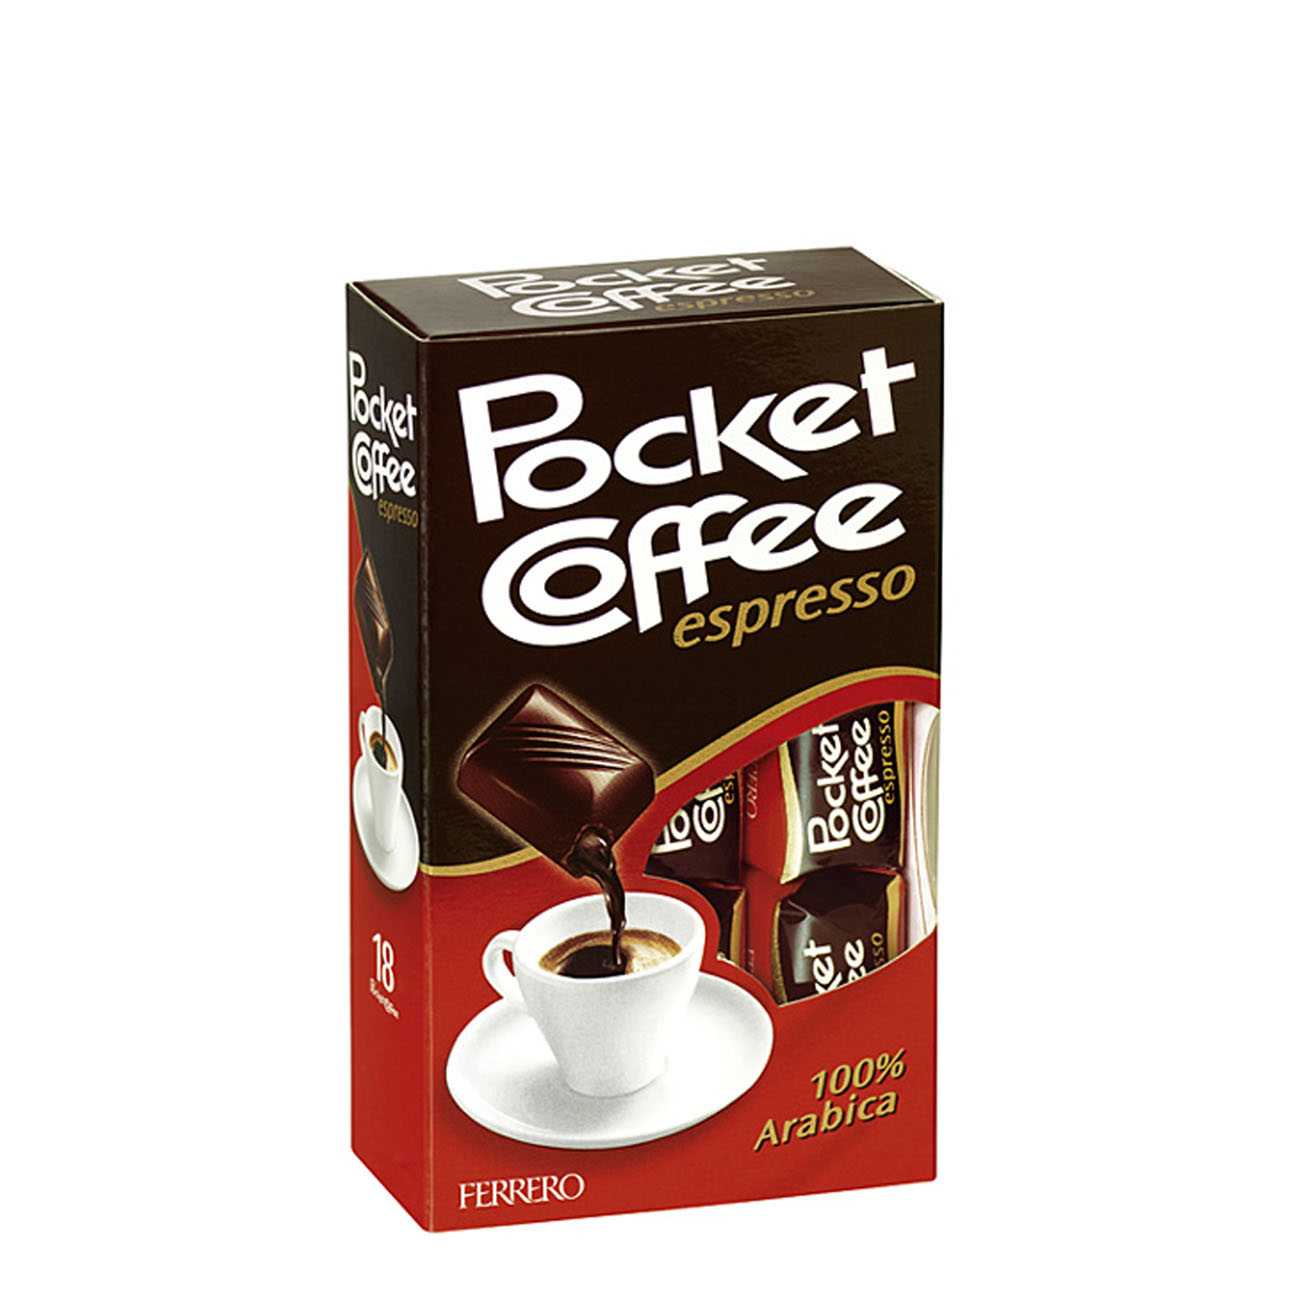 POCKET COFFEE 225 G